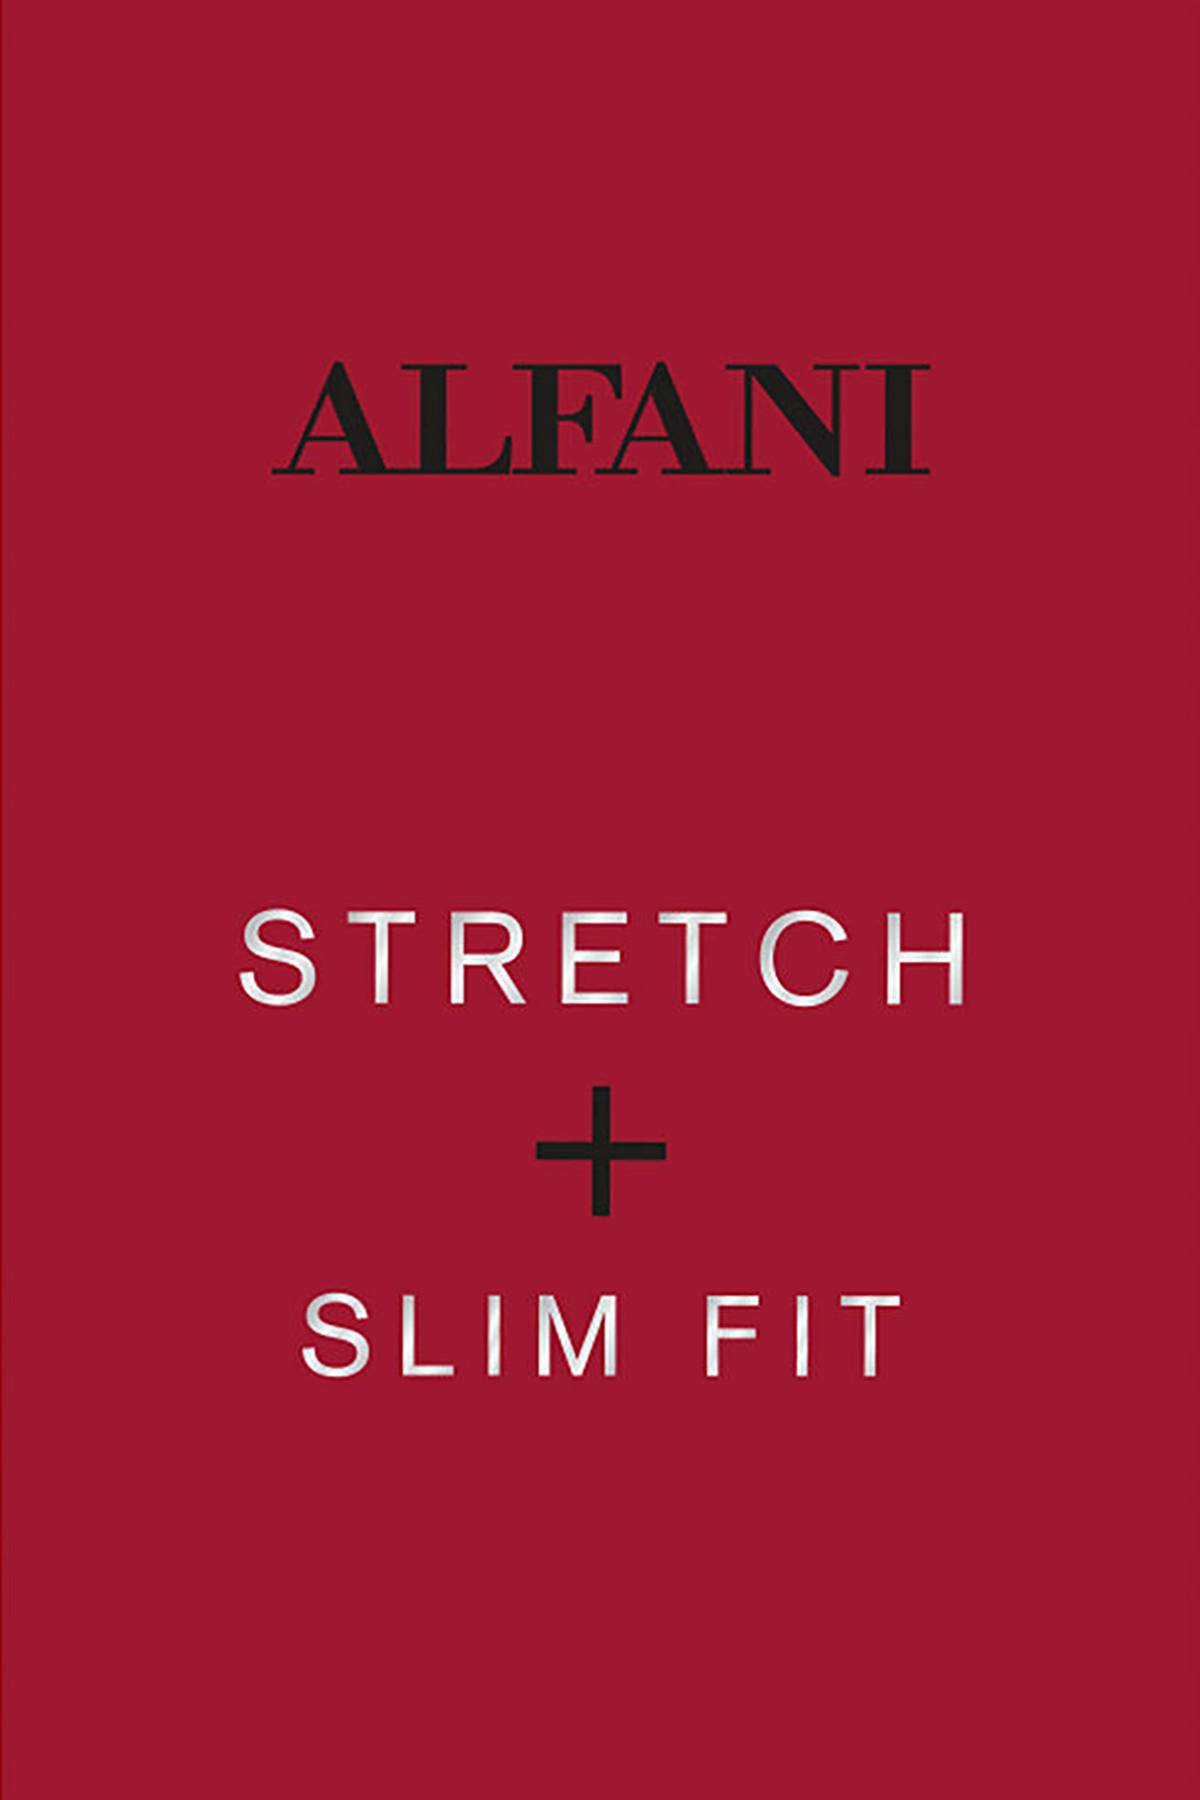 Alfani Fiesta-Pink Spectrum Slim-Fit Stretch Shirt